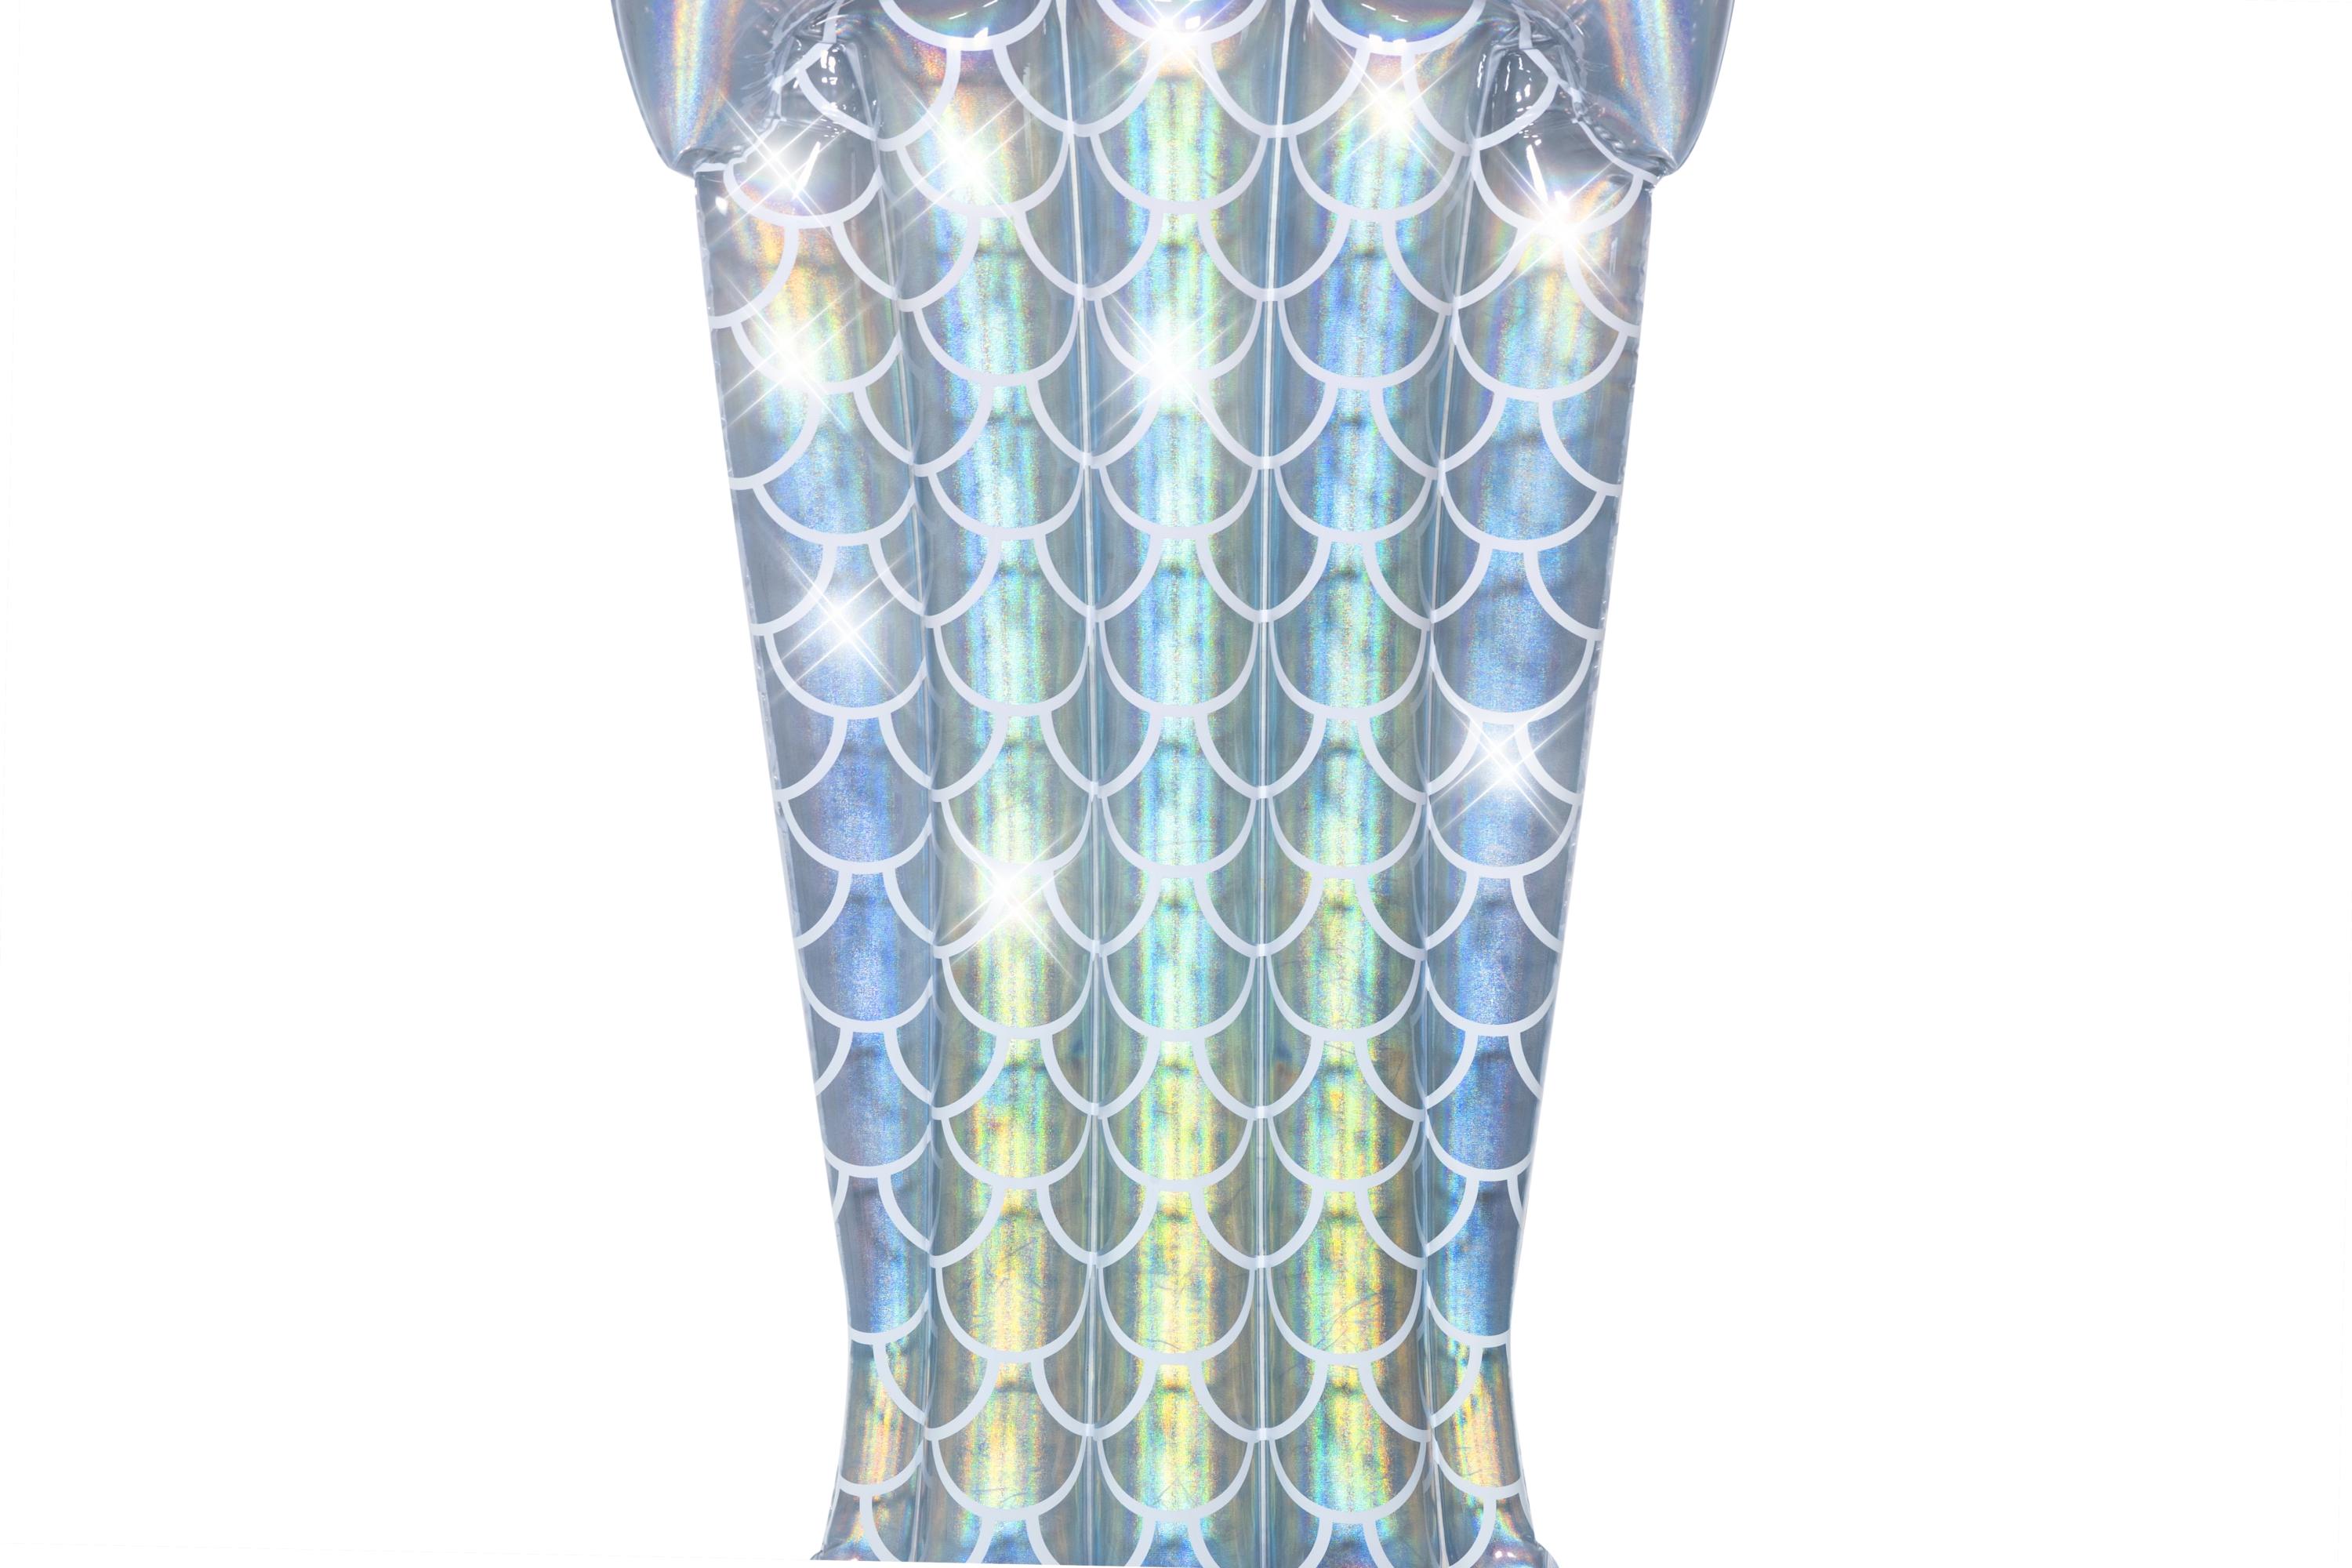 Iridescent Mermaid Tail Float